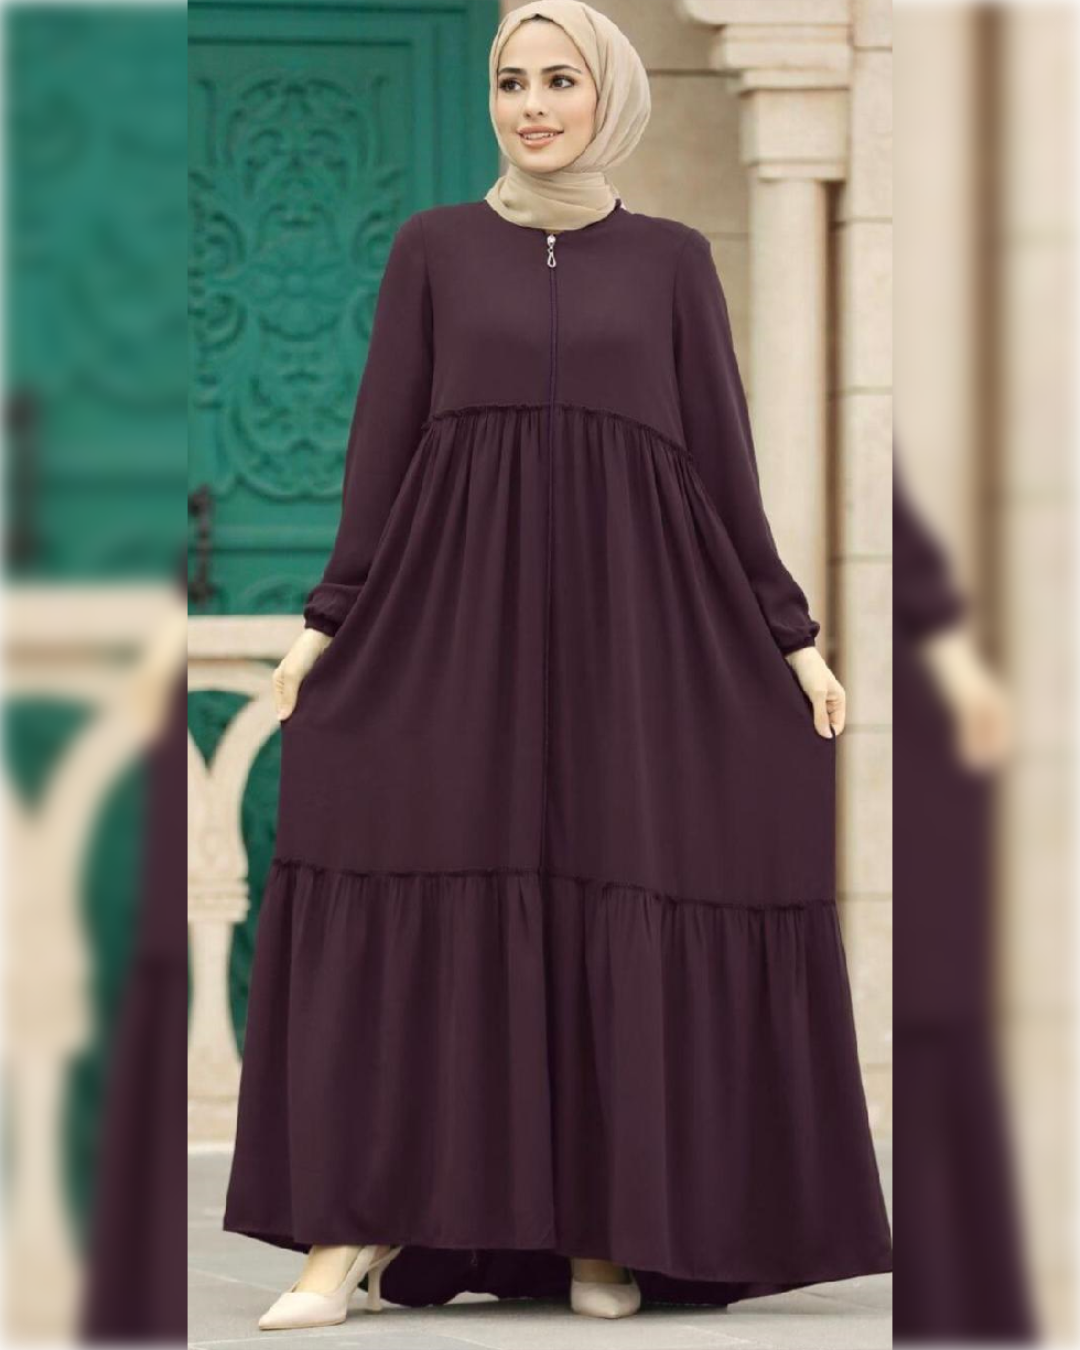 Elegant Abaya Dress in Brown Shade for Summer عباءة صيفية أنيقة باللون البني الجميل